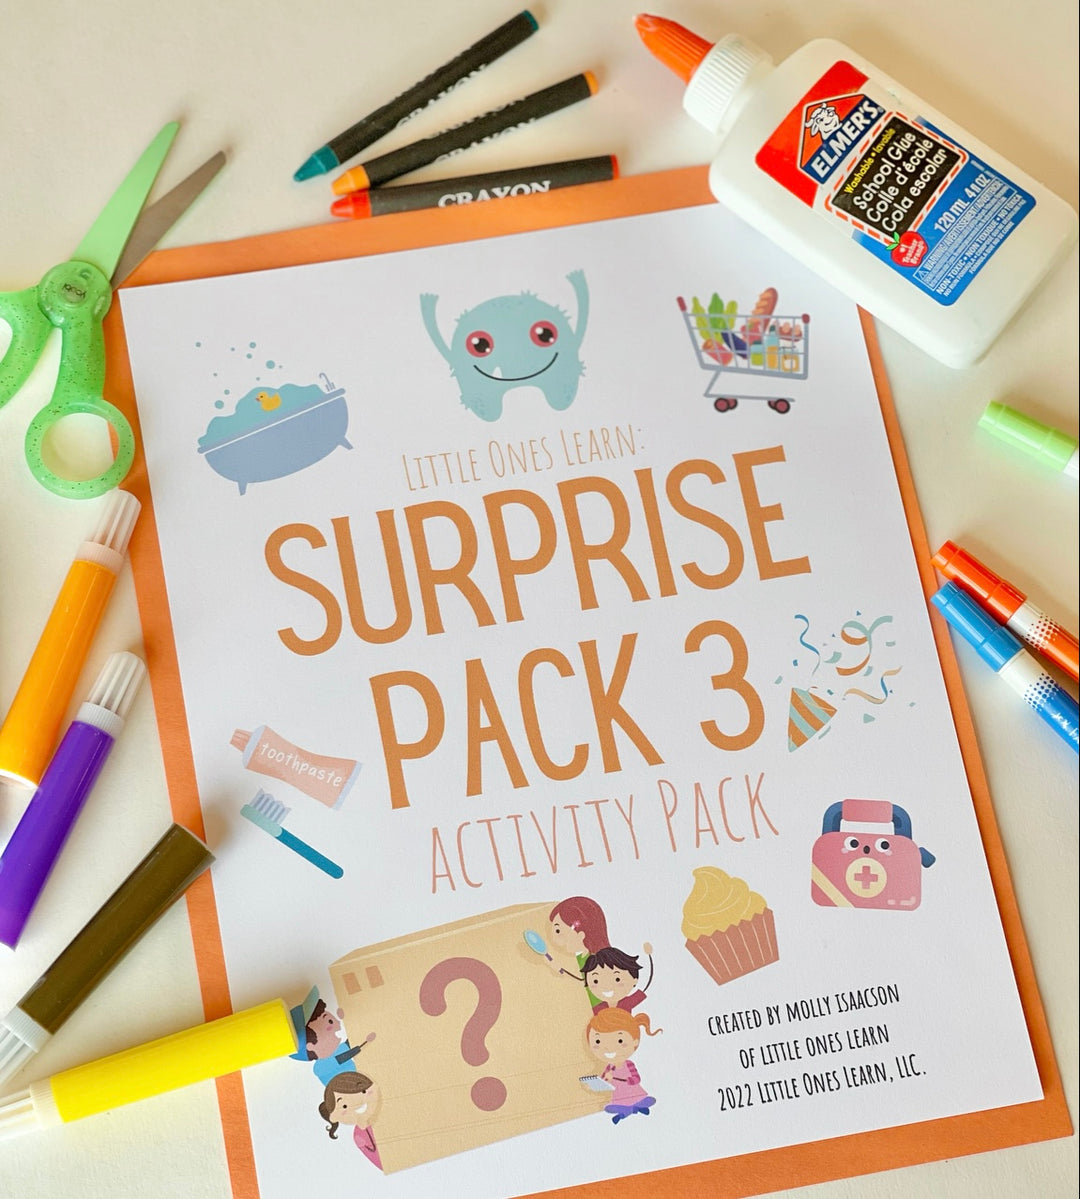 LOL Surprise Pack 3 Activity Pack